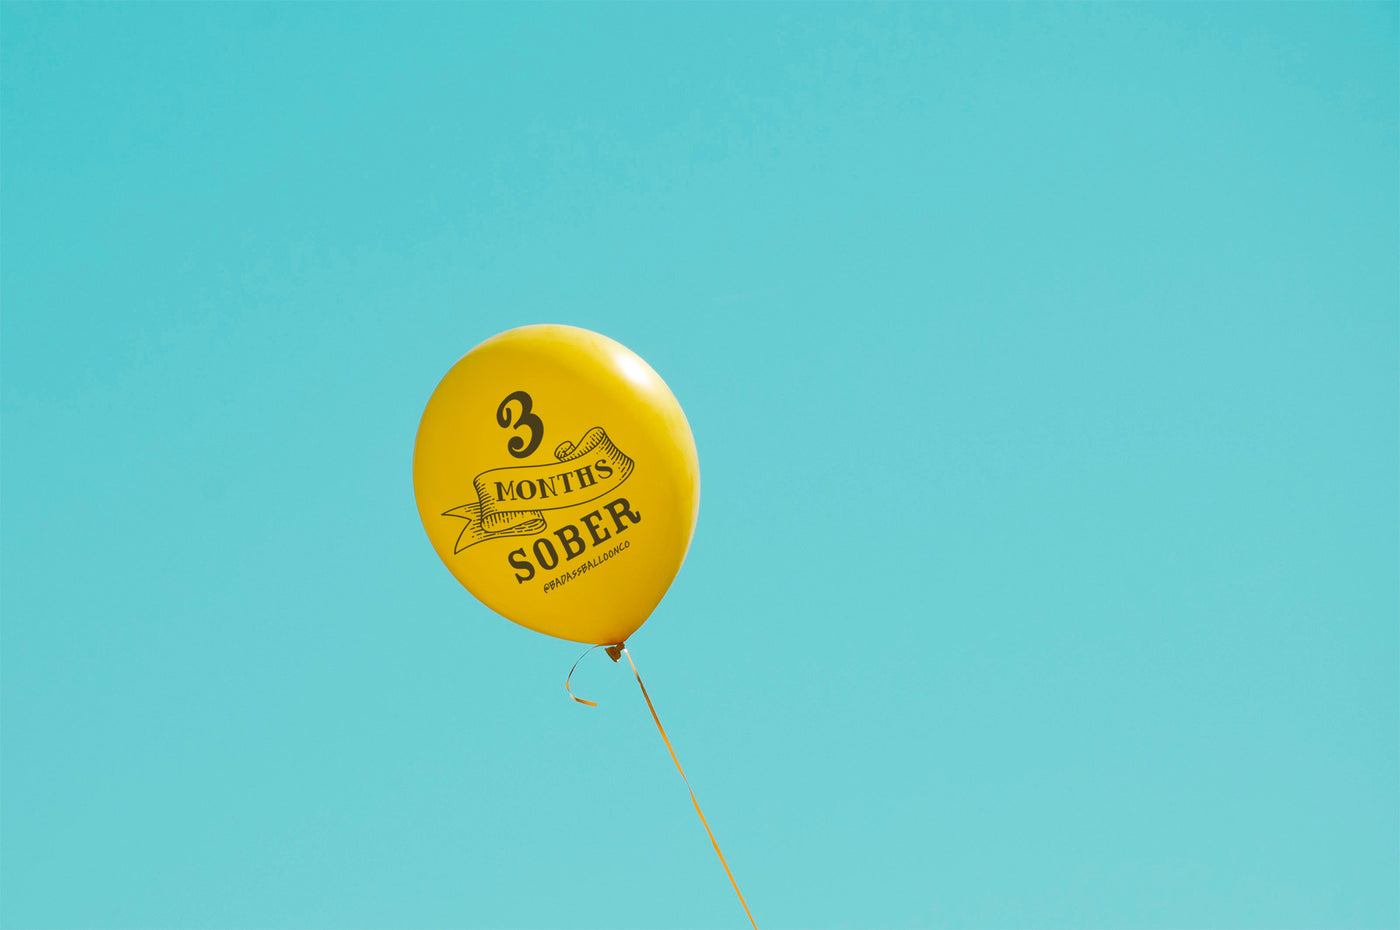 1 month Sober | Soberversary Balloons